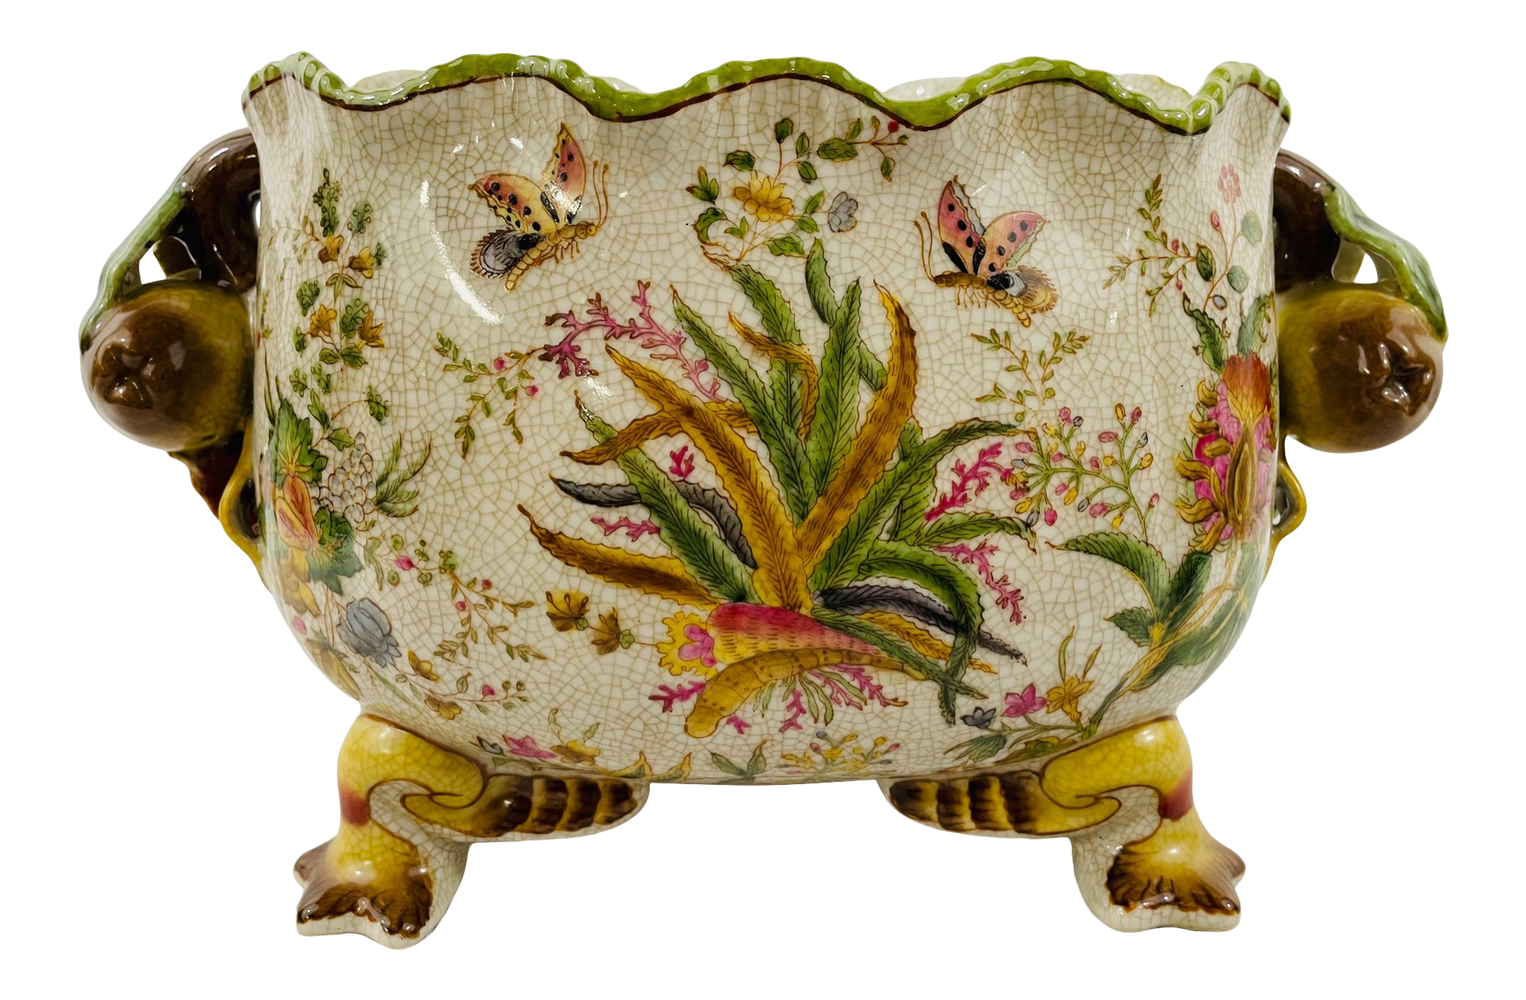 Vintage Asian Porcelain Jardiniere or Planter